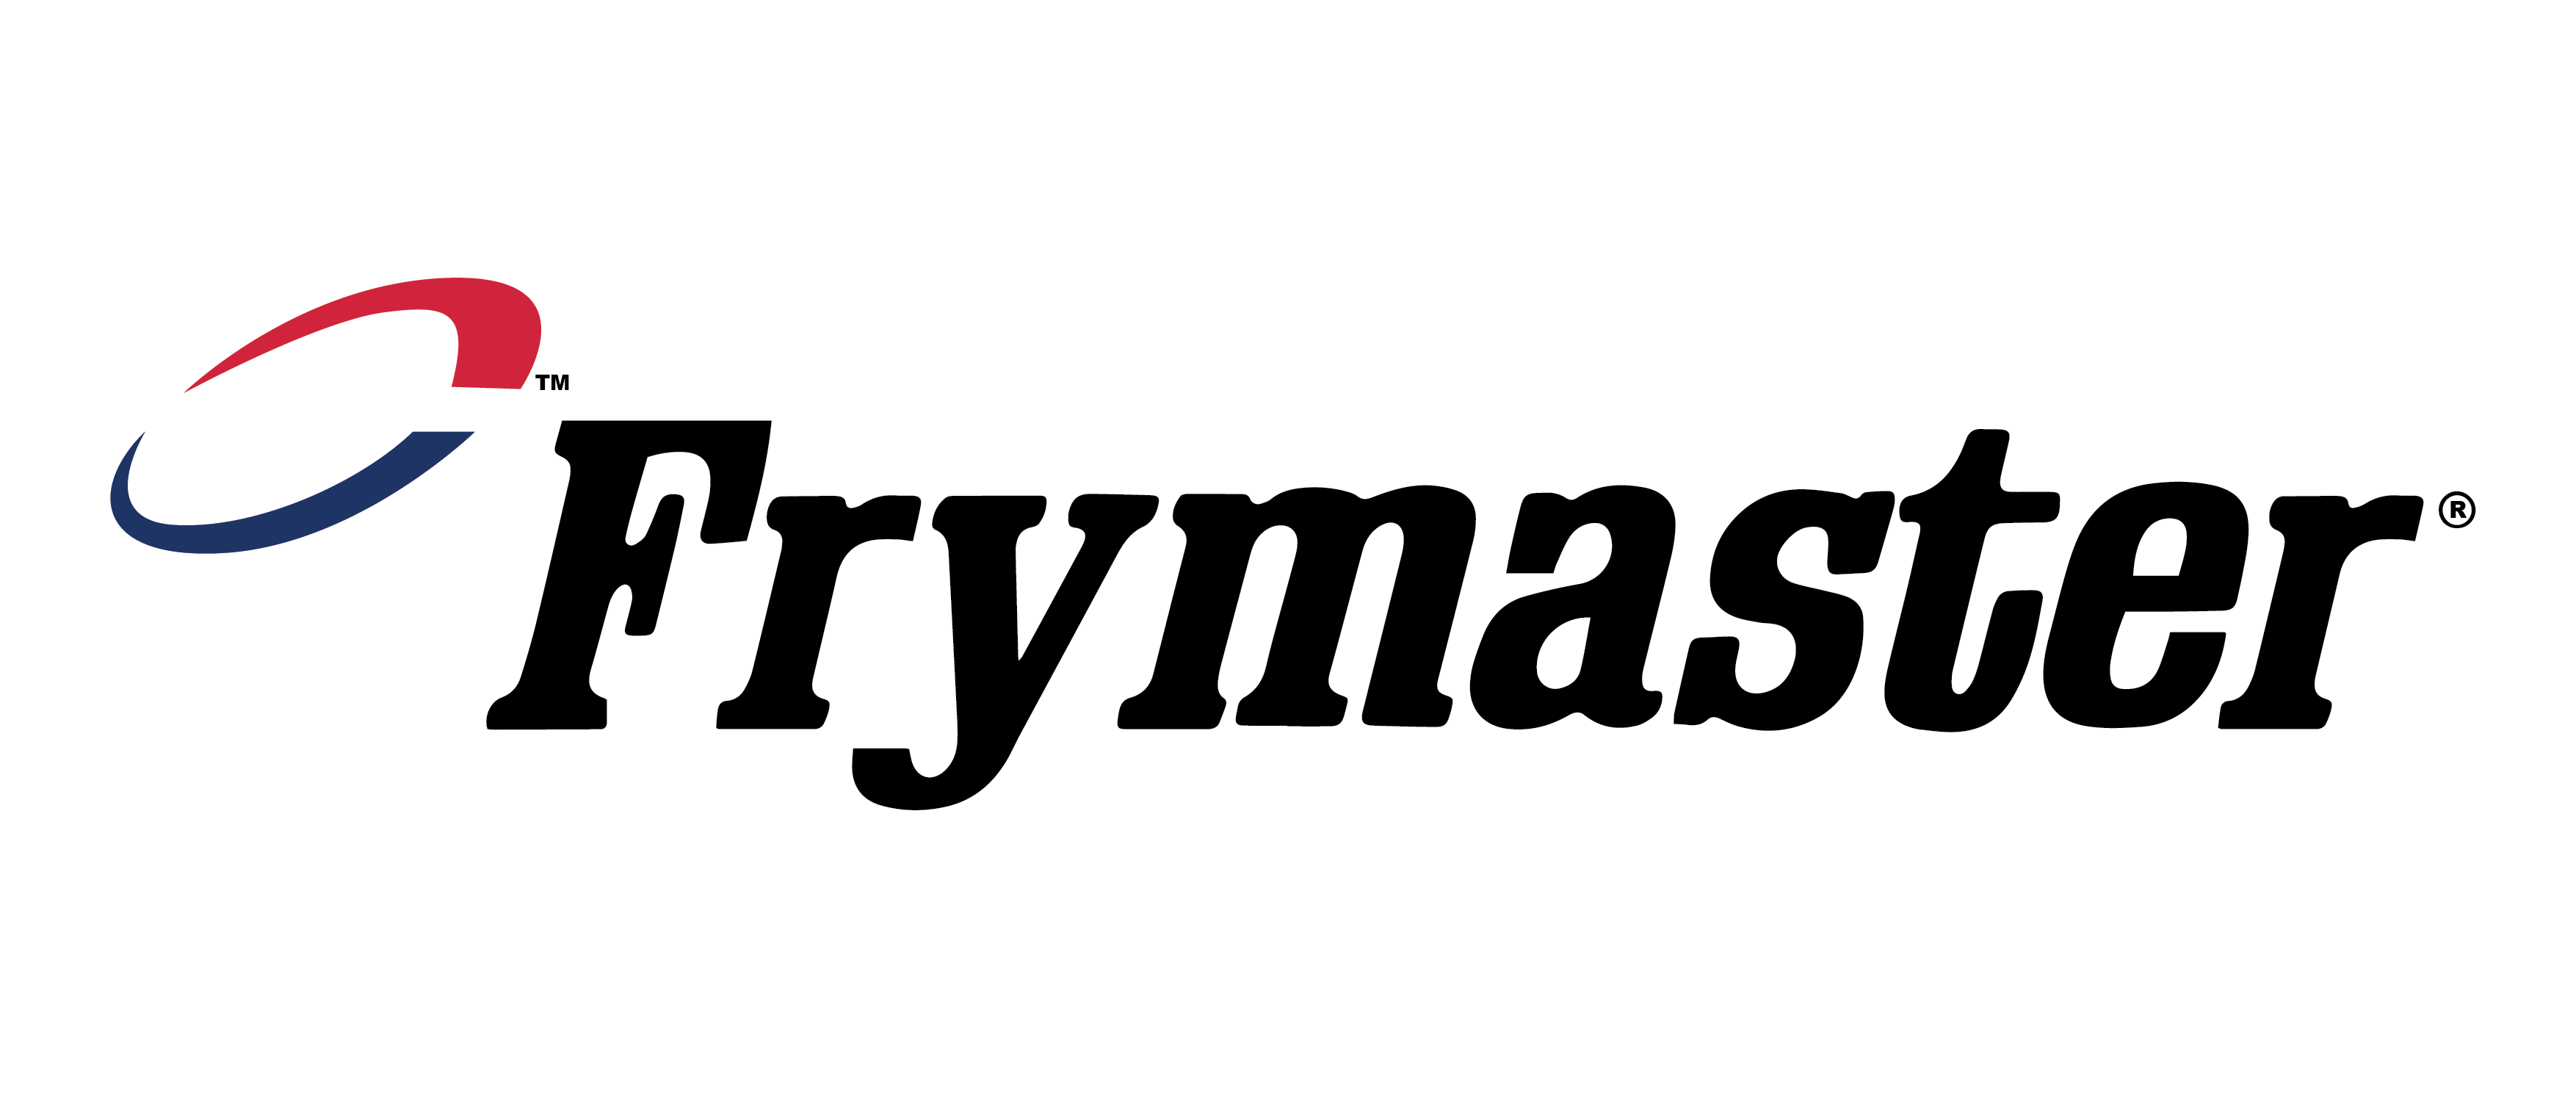 Frymaster